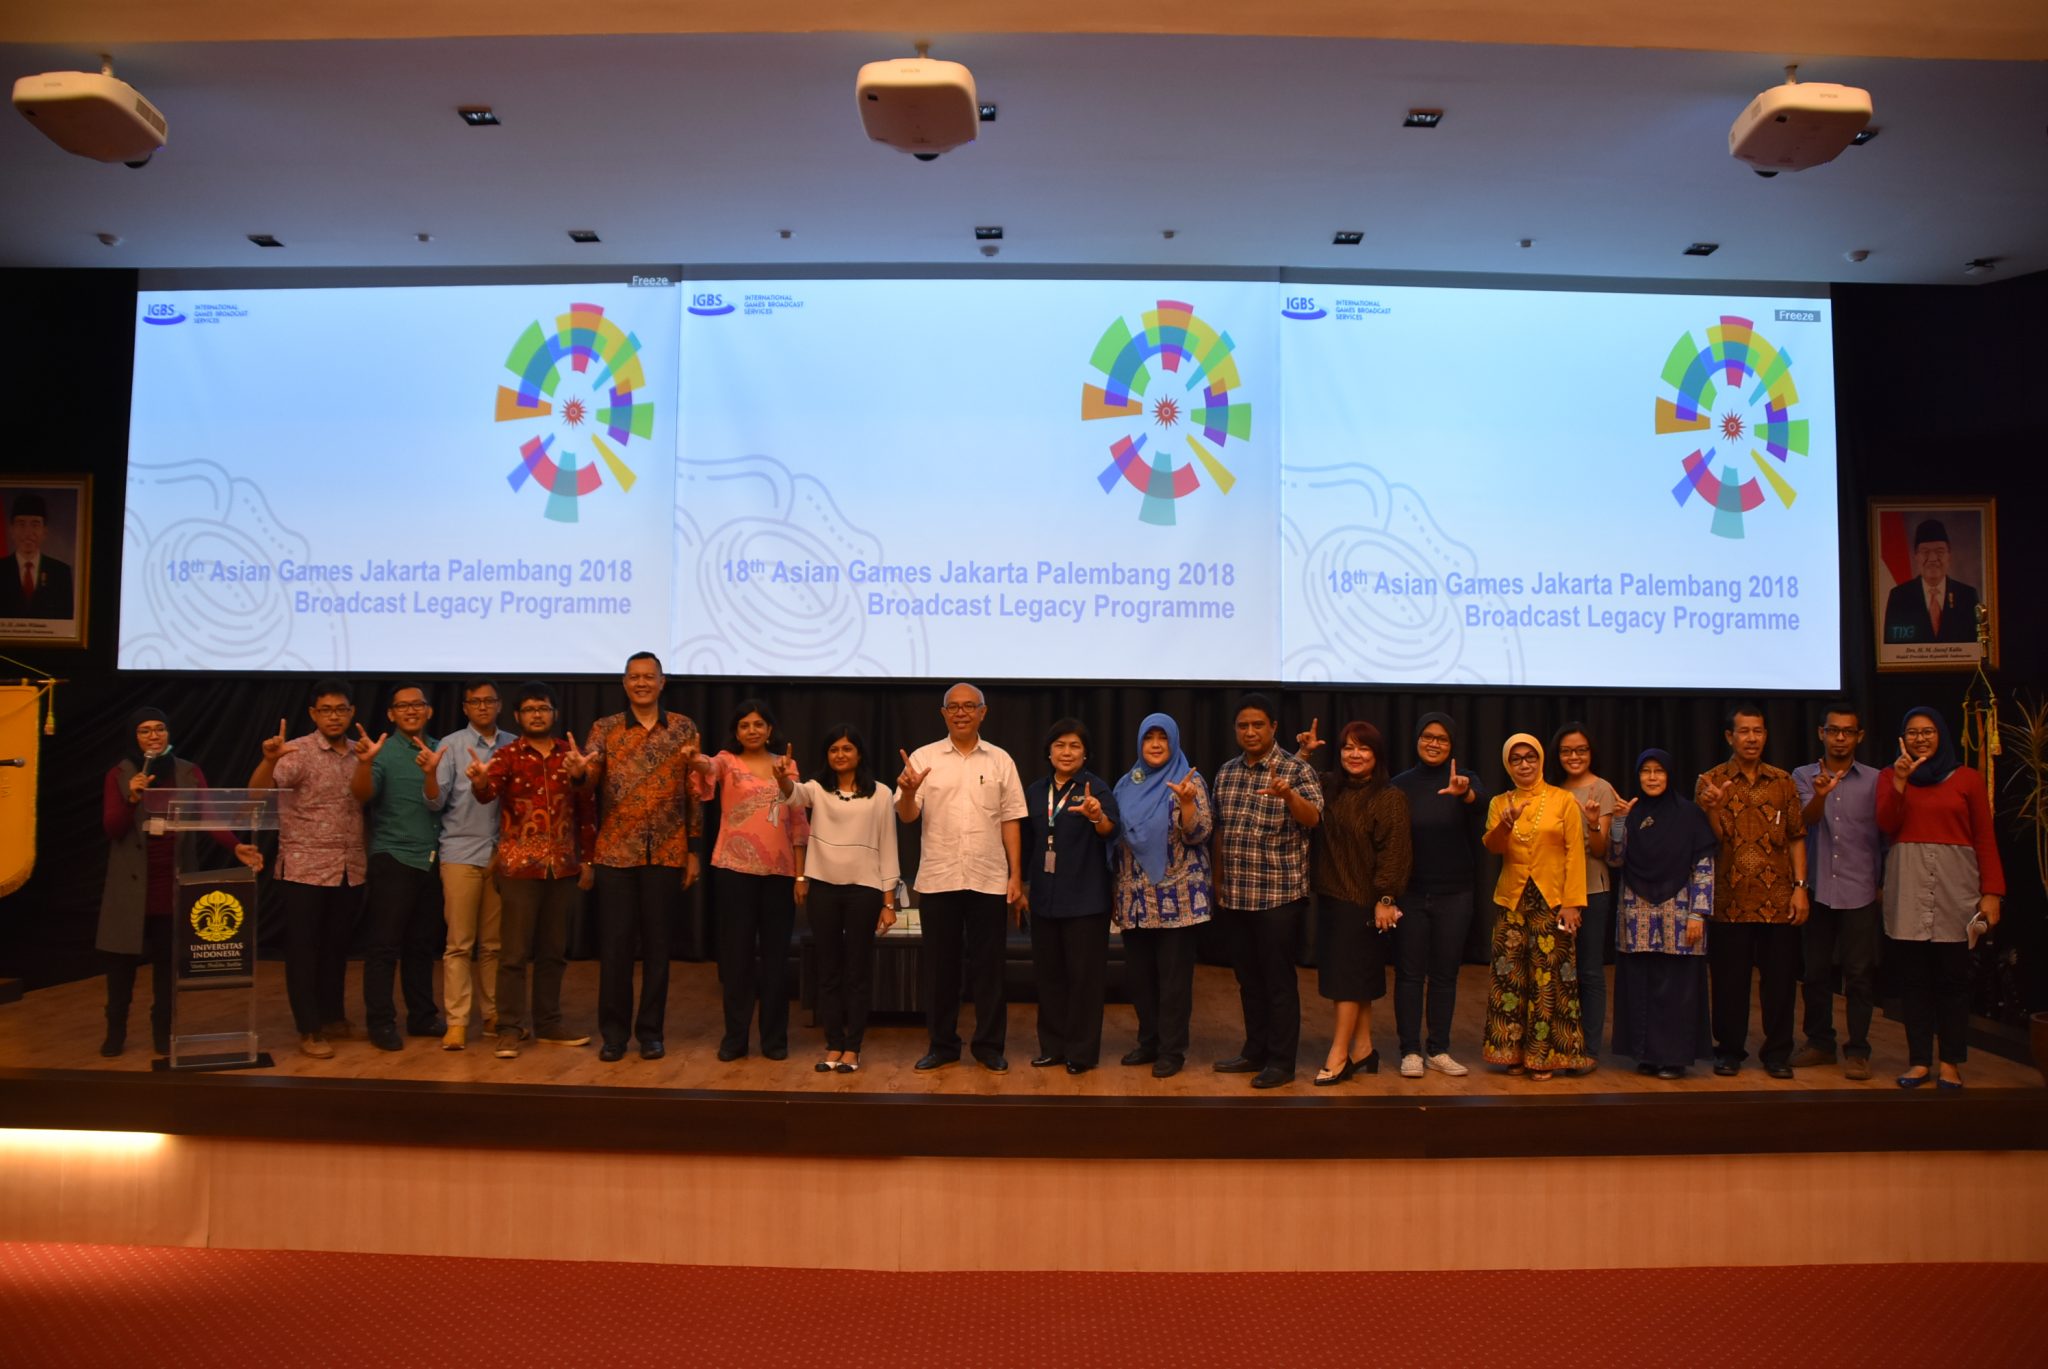 Sosialisasi Broadcast Legacy Programme 18th Asian Games Jakarta Palembang 2018